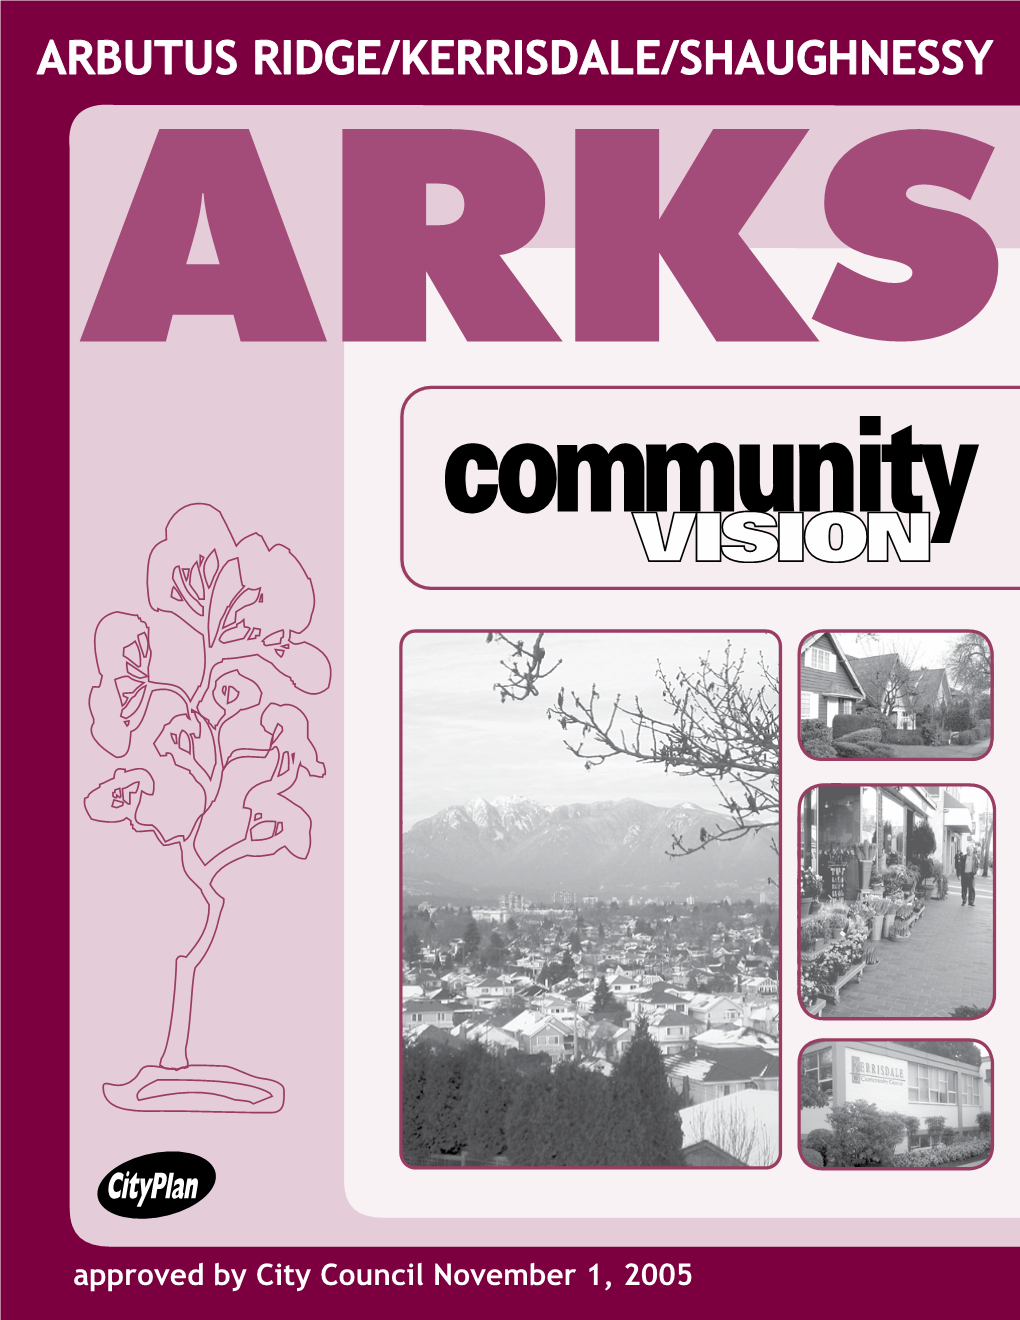 ARKS (Arbutus Ridge / Kerrisdale / Shaughnessy) Community Vision